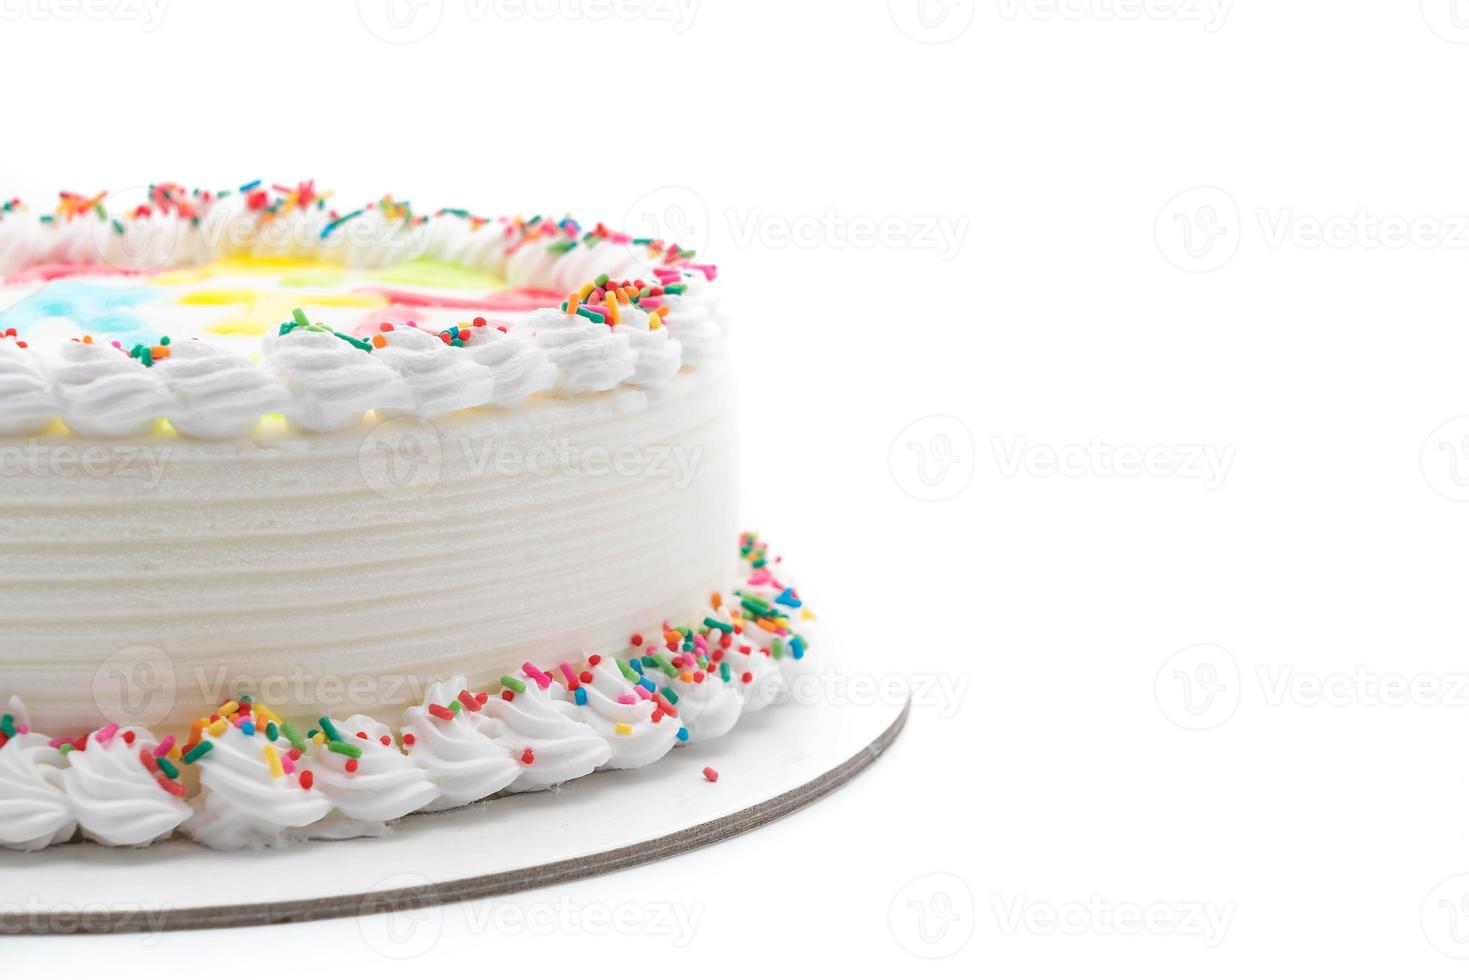 grattis på tårta på vit bakgrund foto